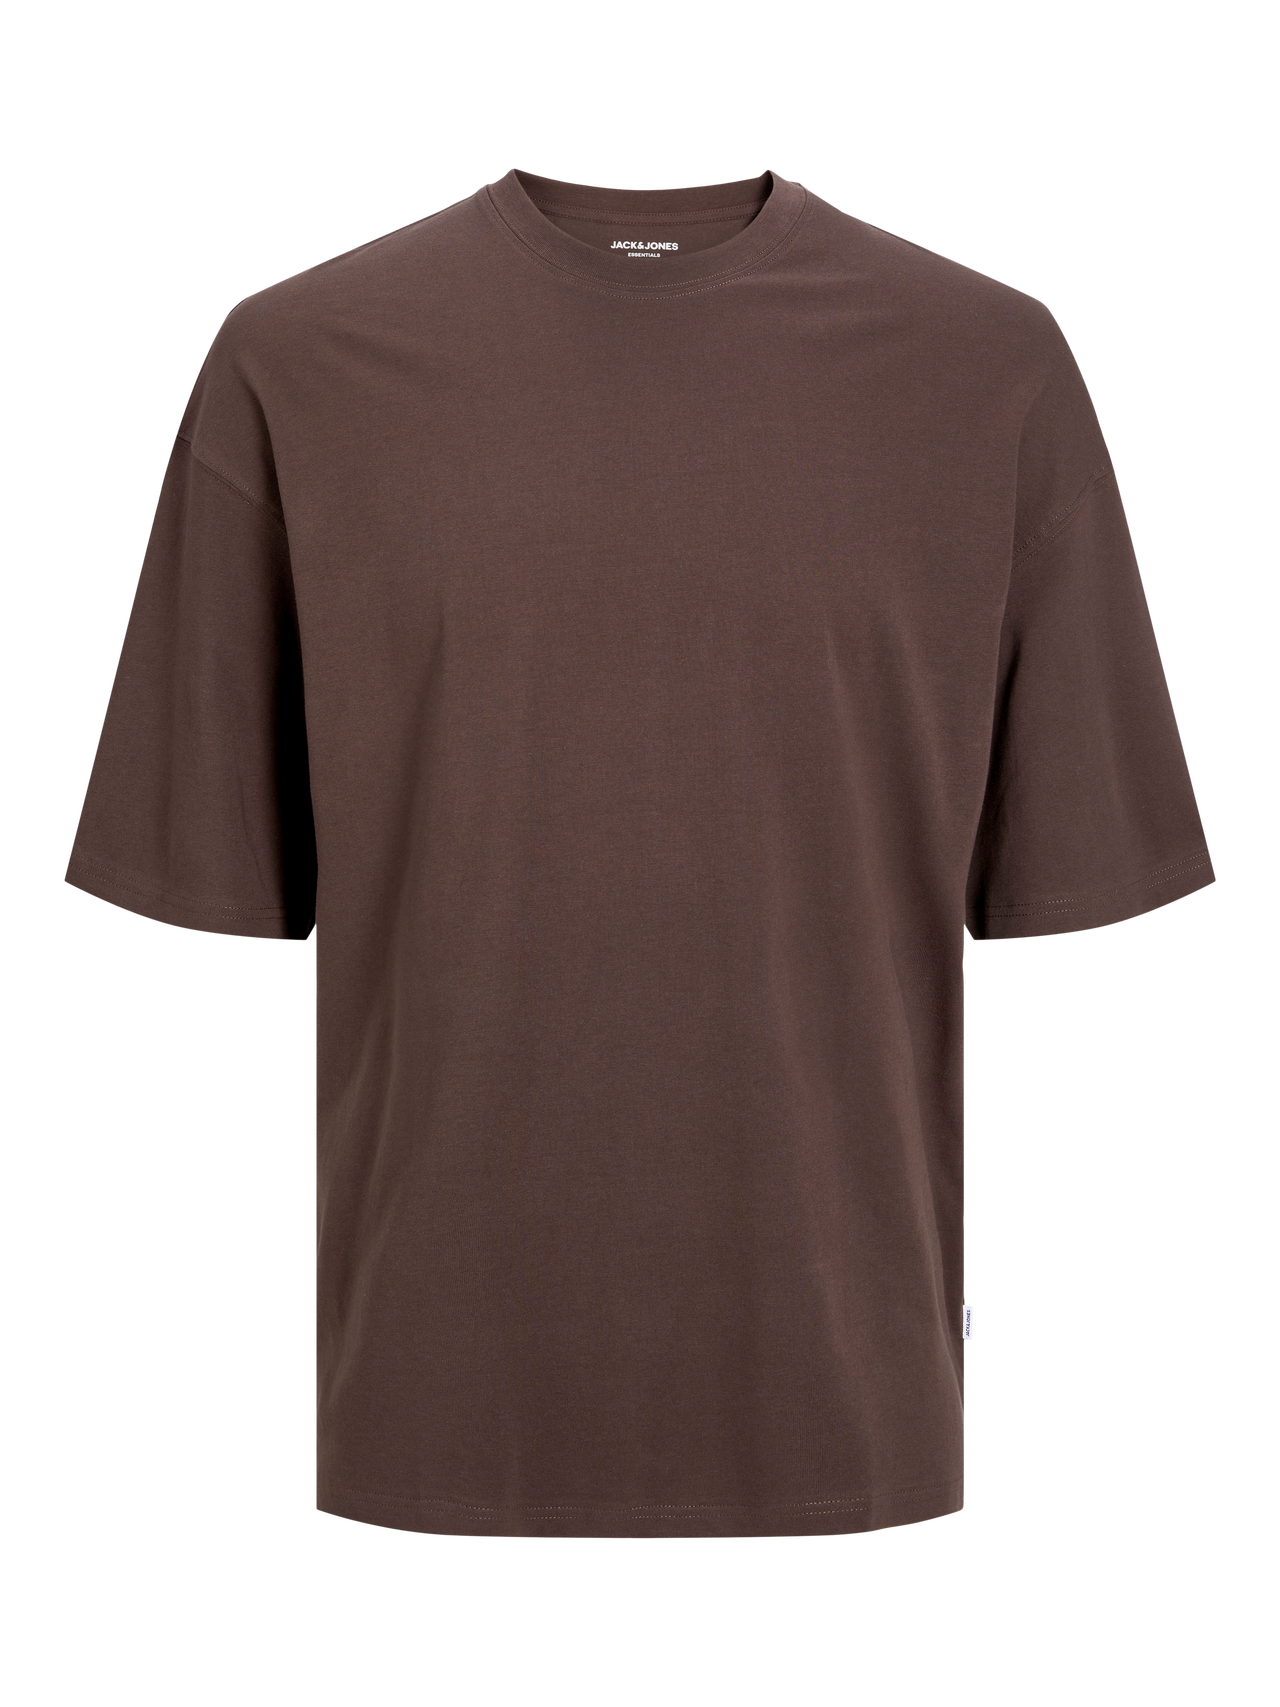 Jack & Jones Plain Crew neck T-shirt -Mulch - 12259975